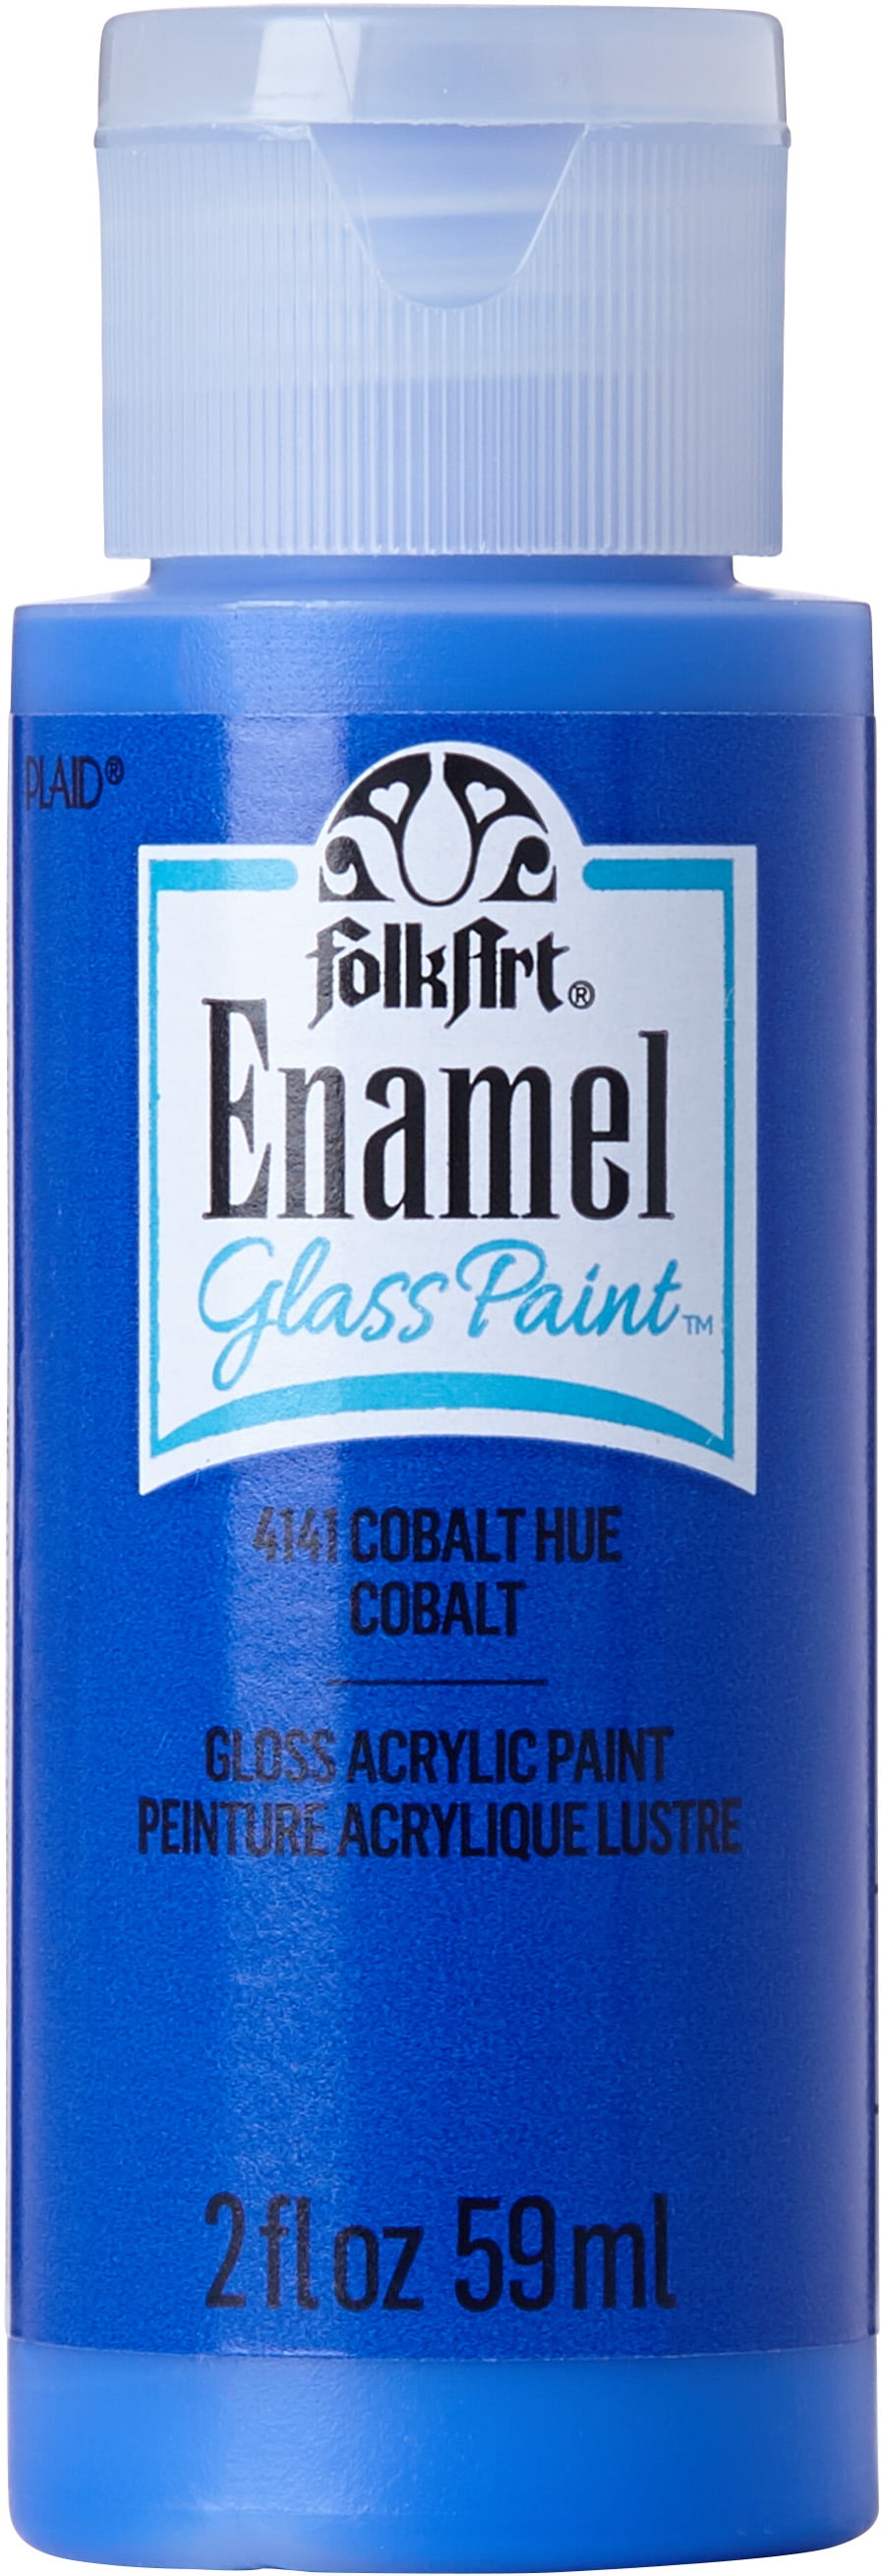 FolkArt Enamel Acrylic Craft Paint, Gloss Finish, Cobalt Hue, 2 fl oz